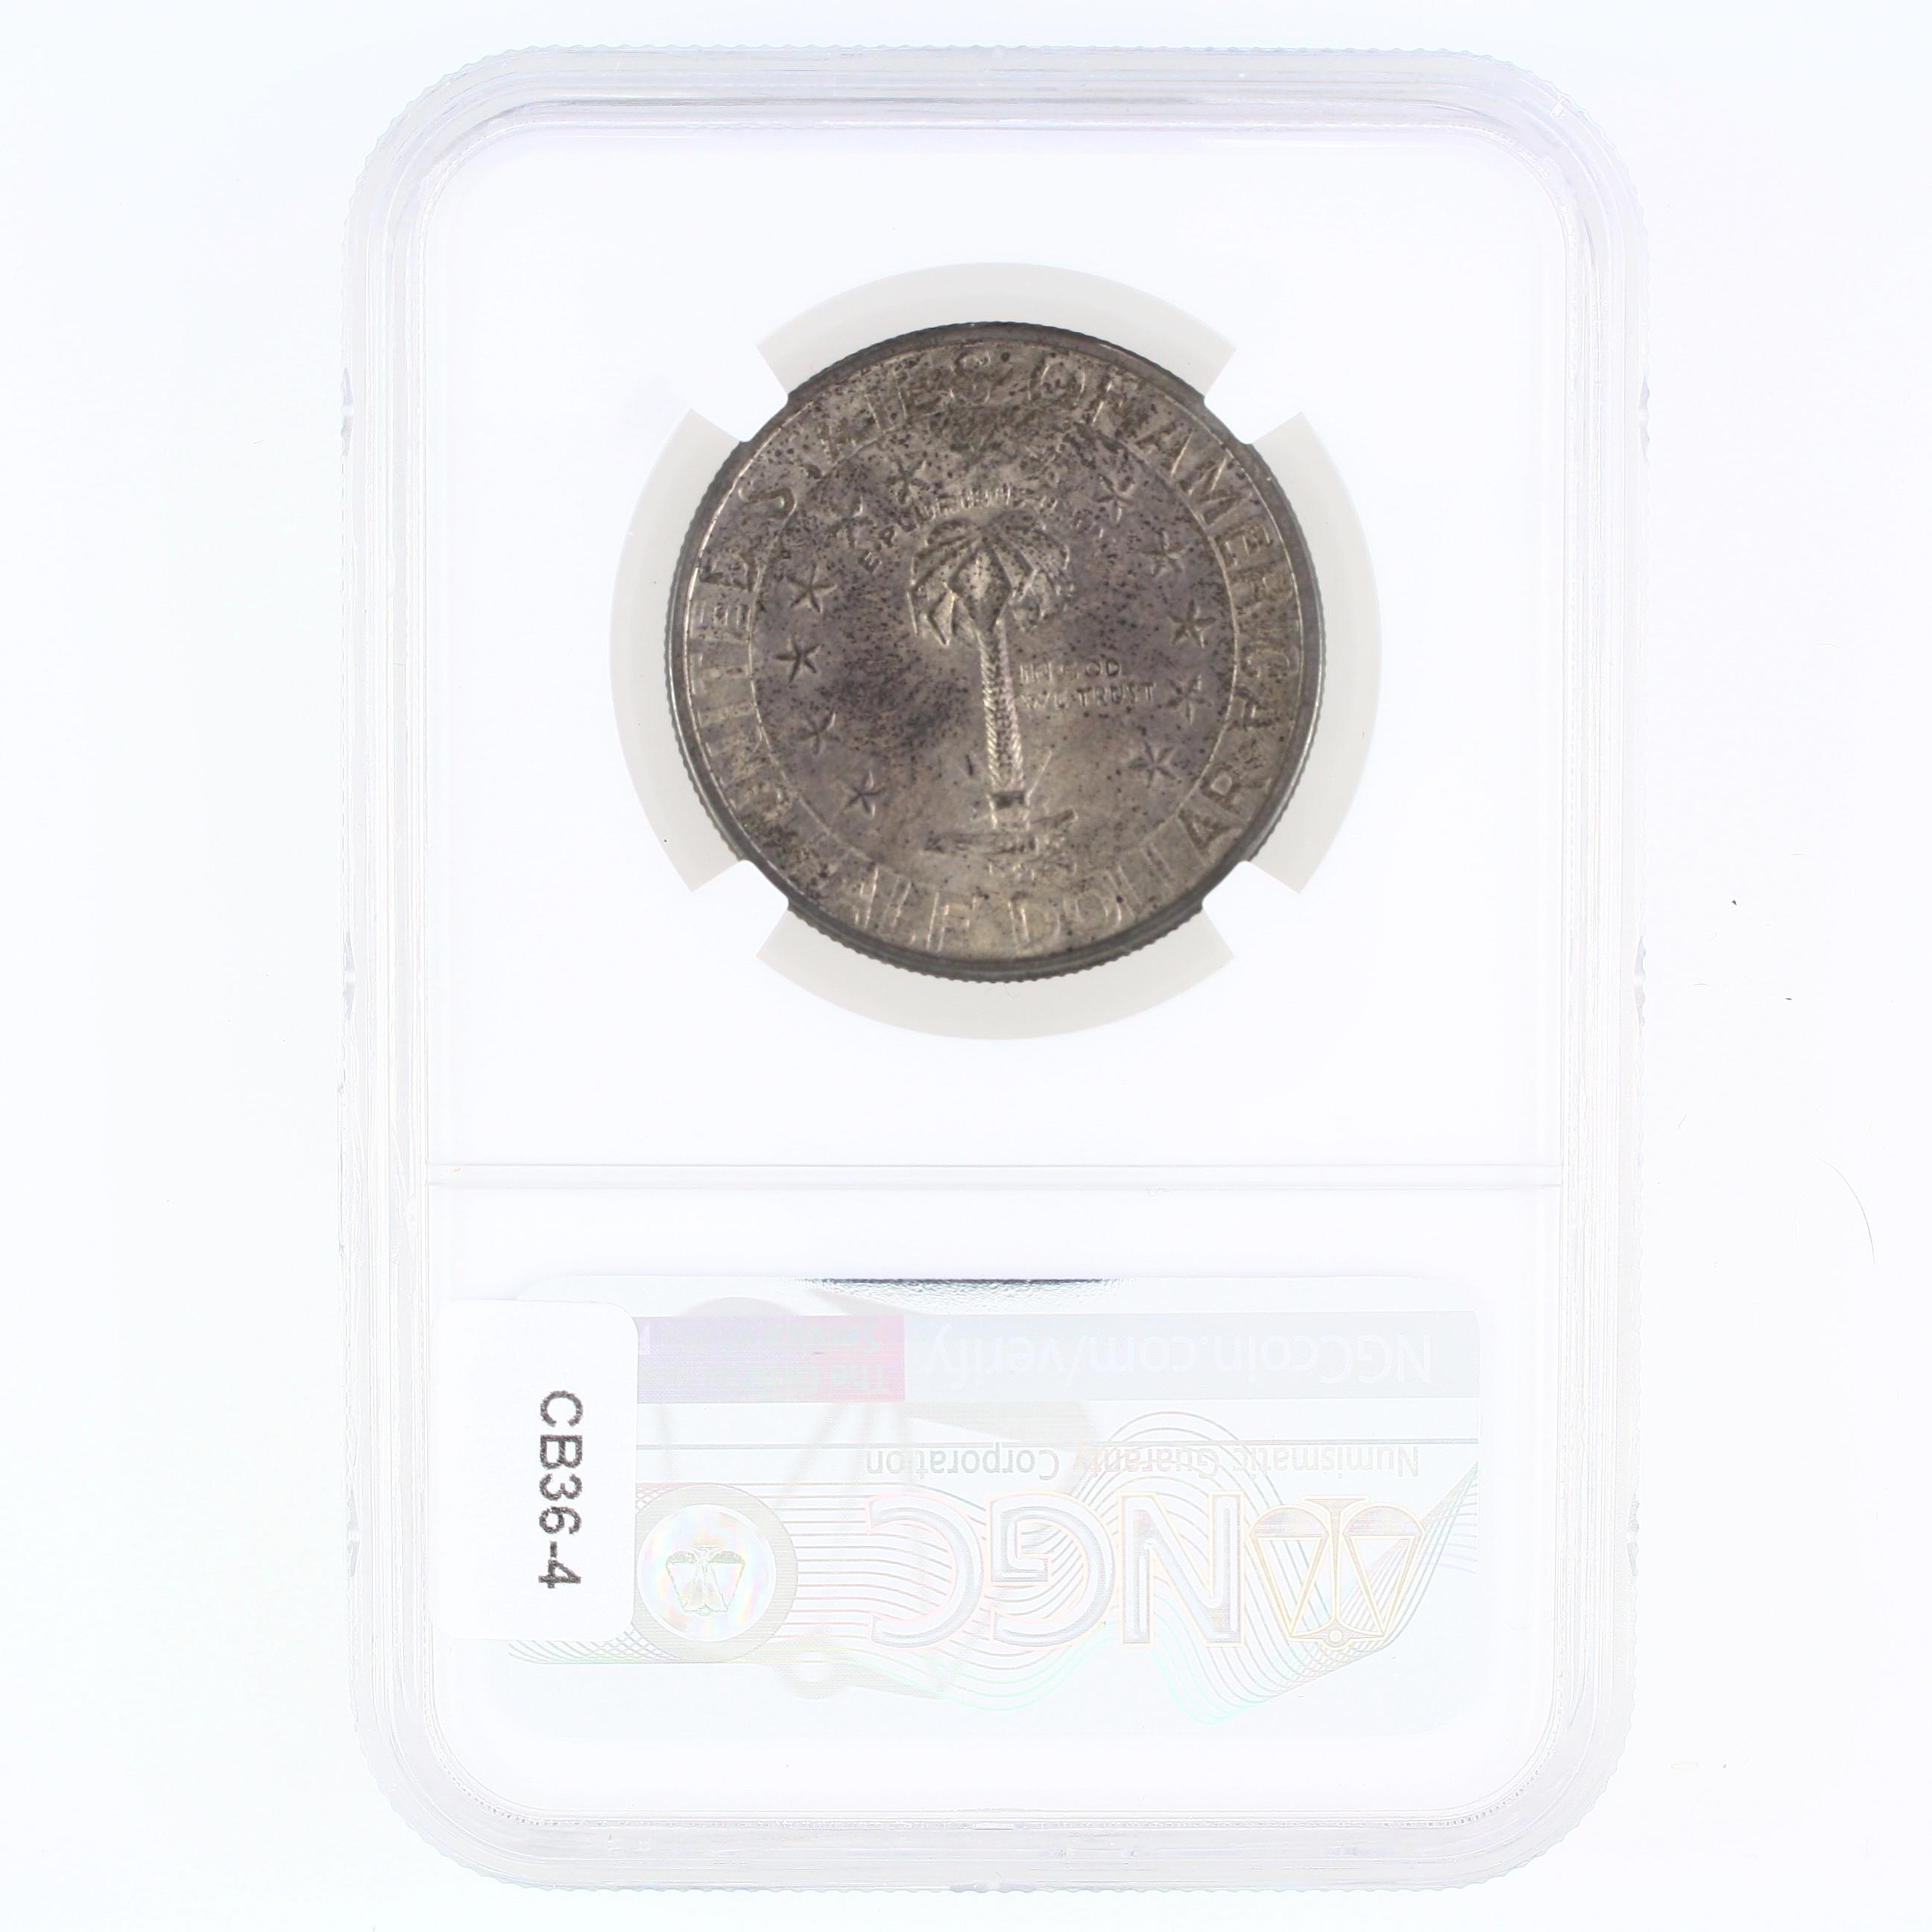 Certified 1936-D U.S. Columbia commemorative half dollar